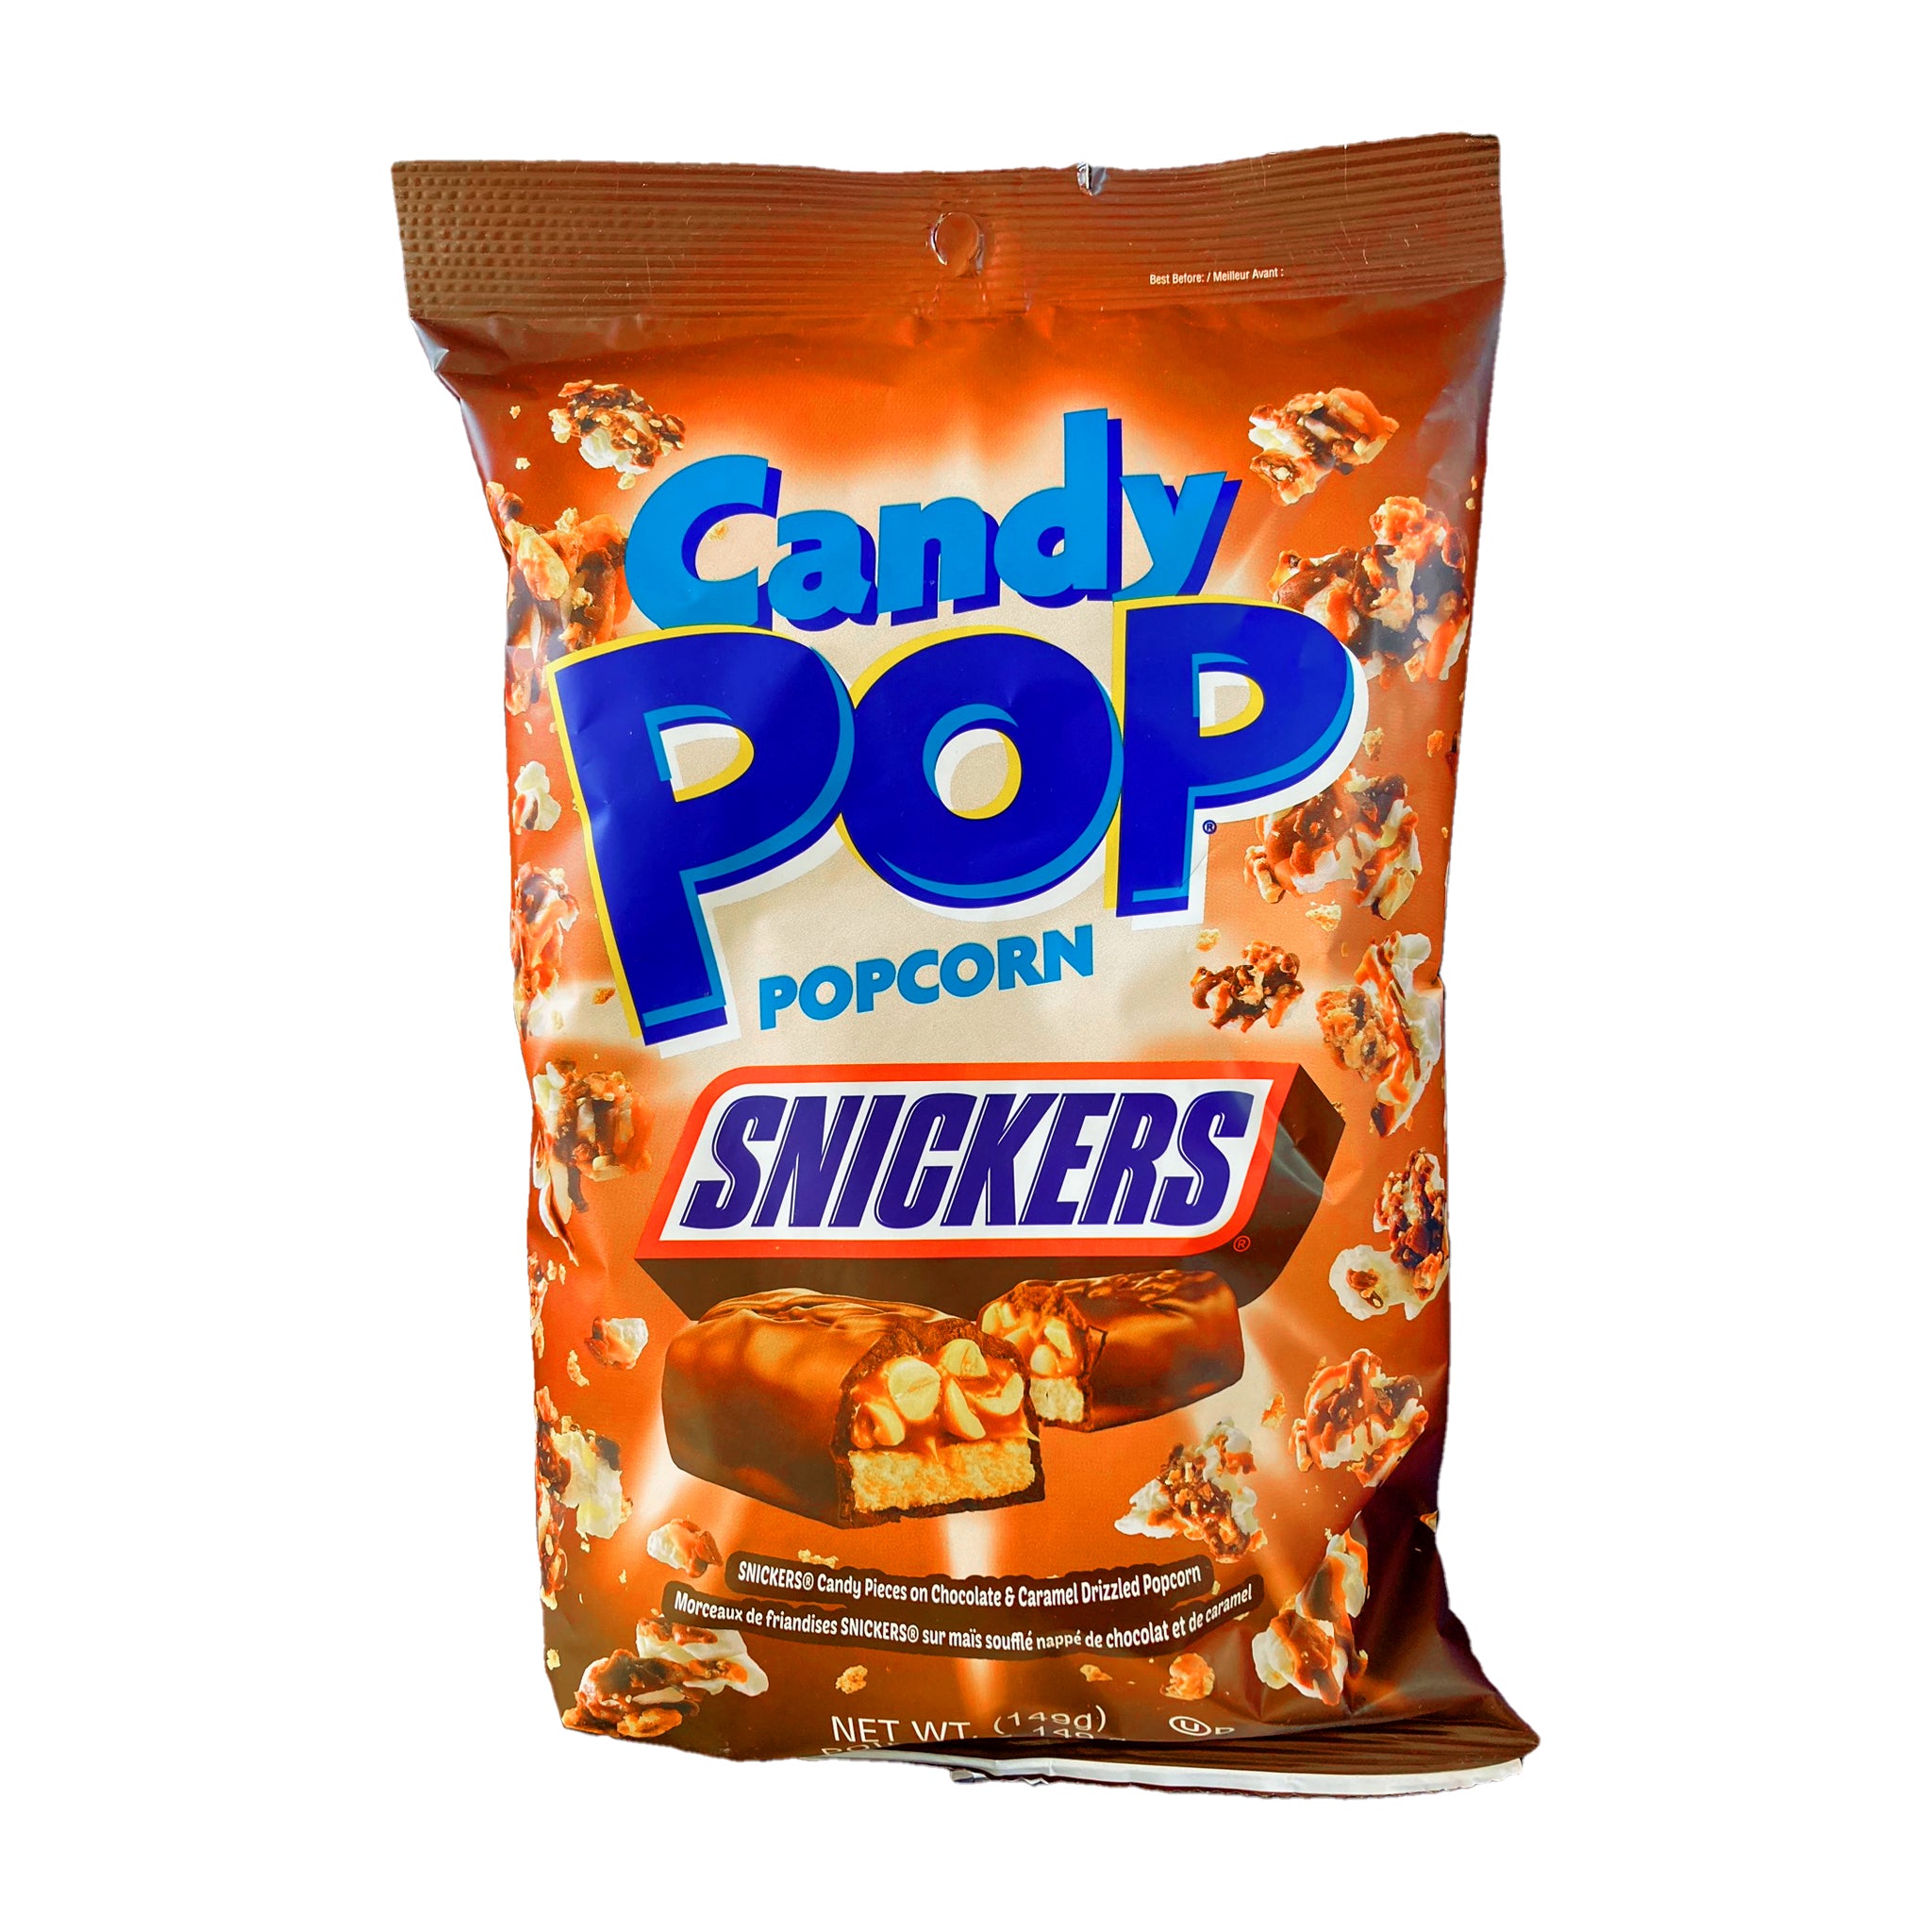 Popcorn Candy Pop Snickers פופקורן סניקרס - טעימים